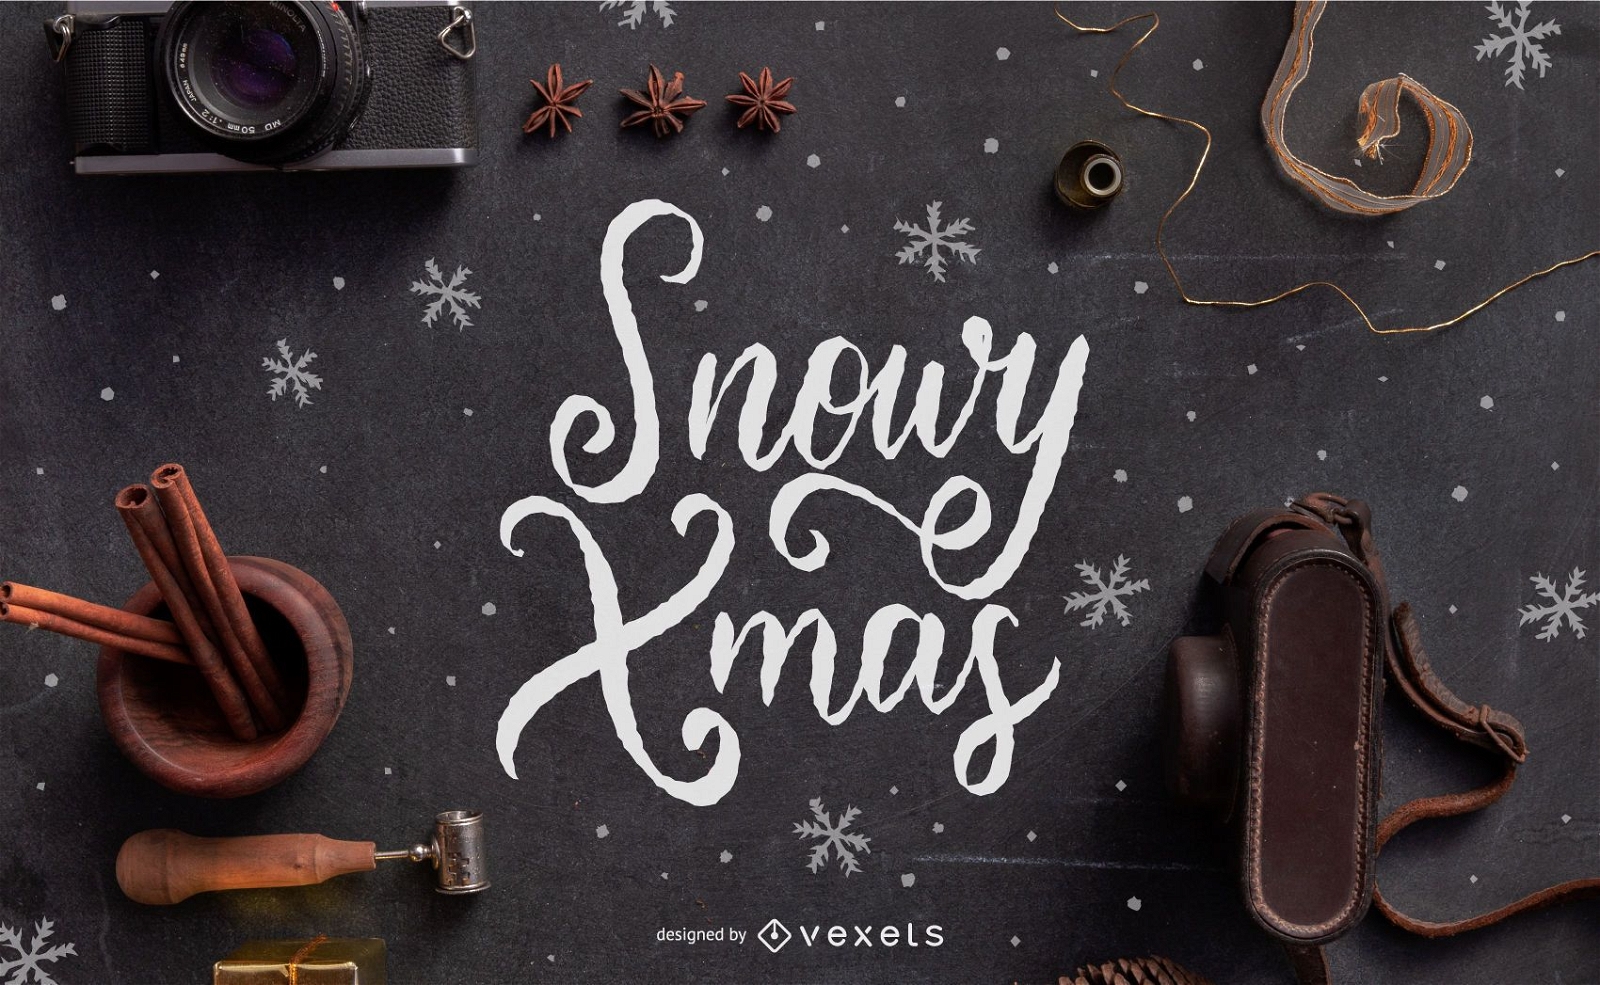 Snowy xmas lettering design